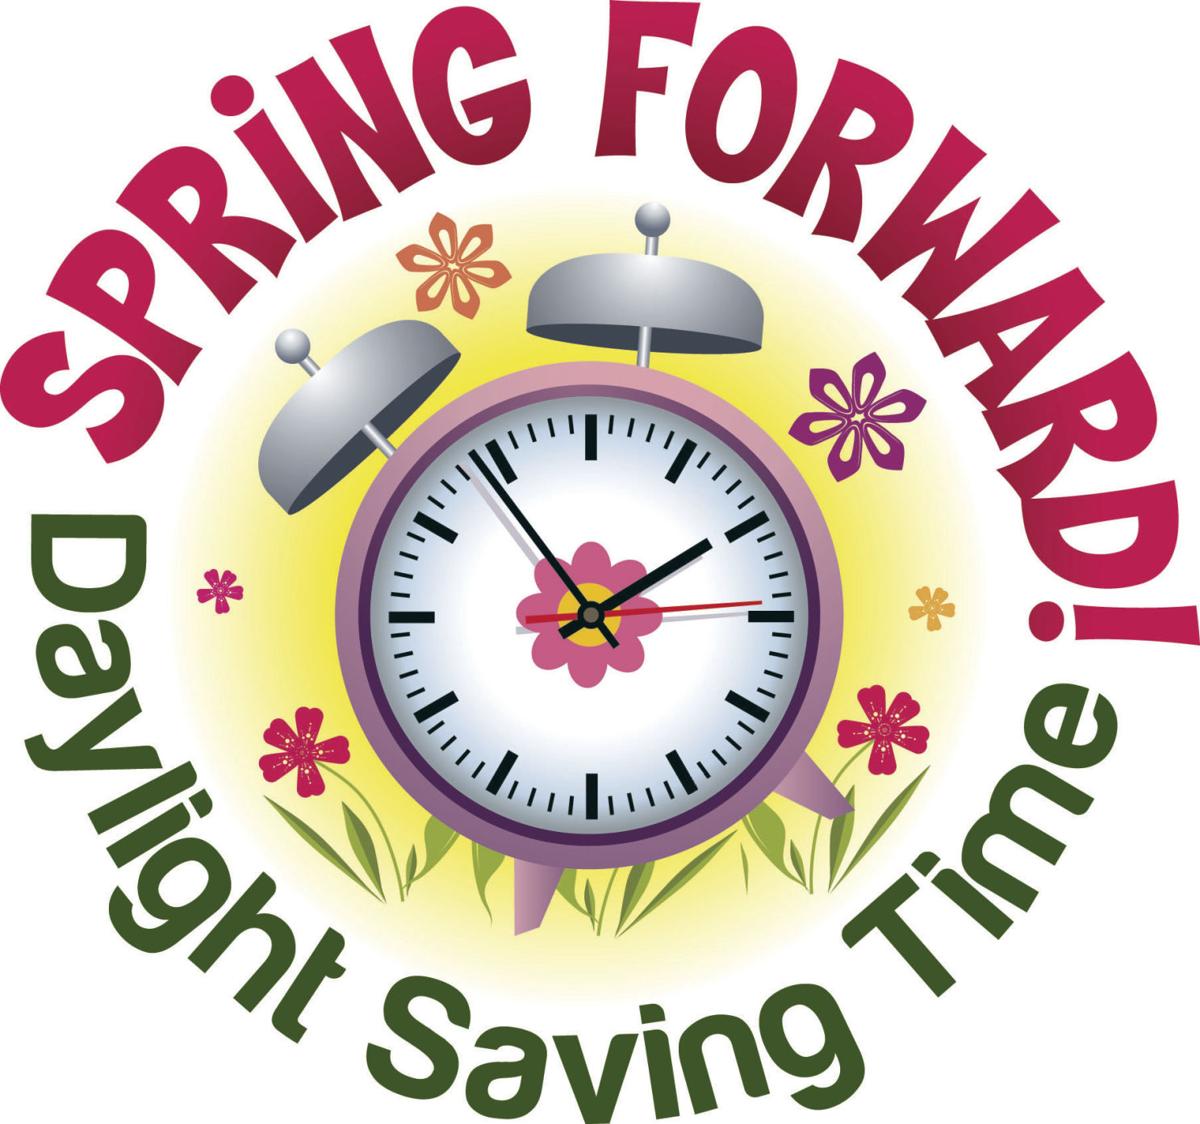 Spring Forward! Daylight Saving Time begins this Sunday 